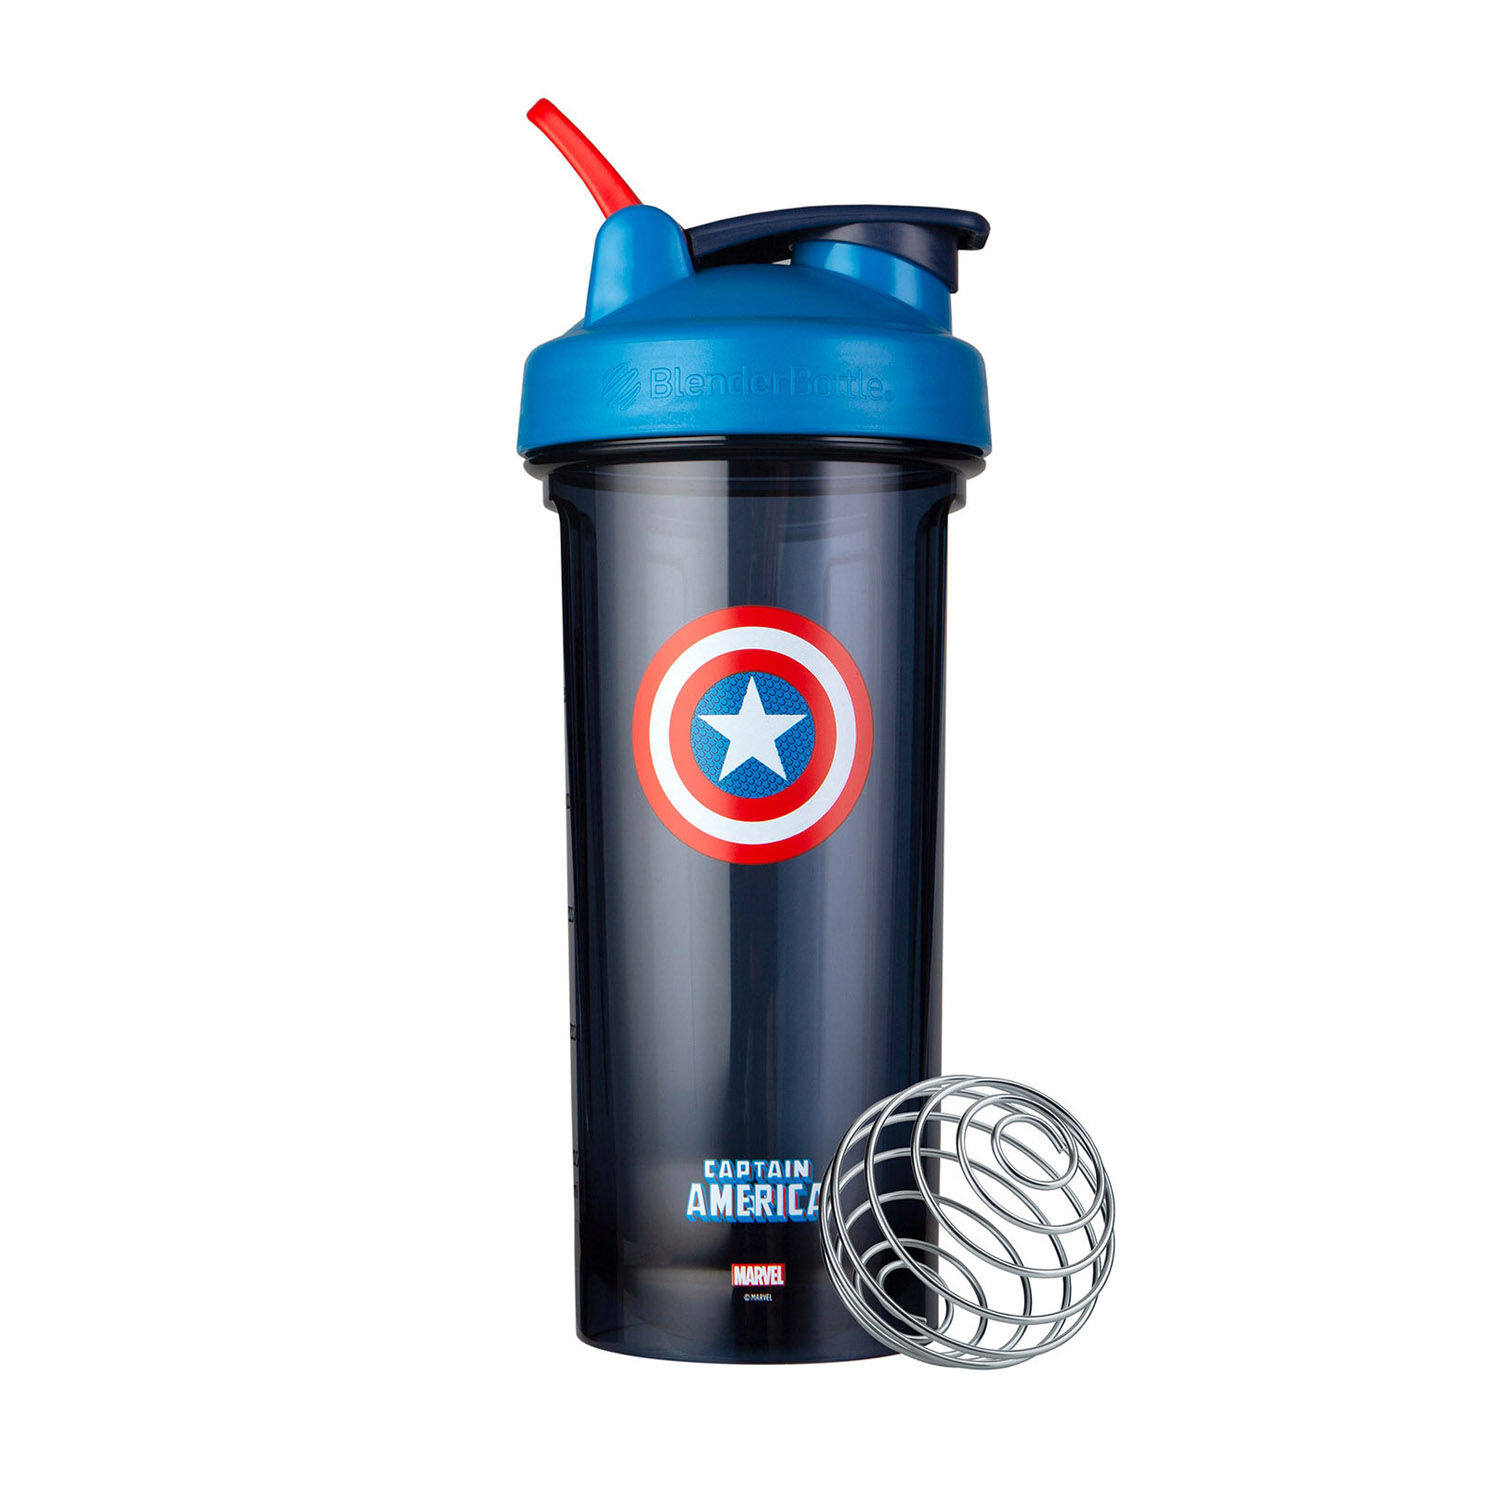 Pro 28&trade; Marvel Pro Series Protein Shaker Bottle - Captain America - 1 Item  | GNC